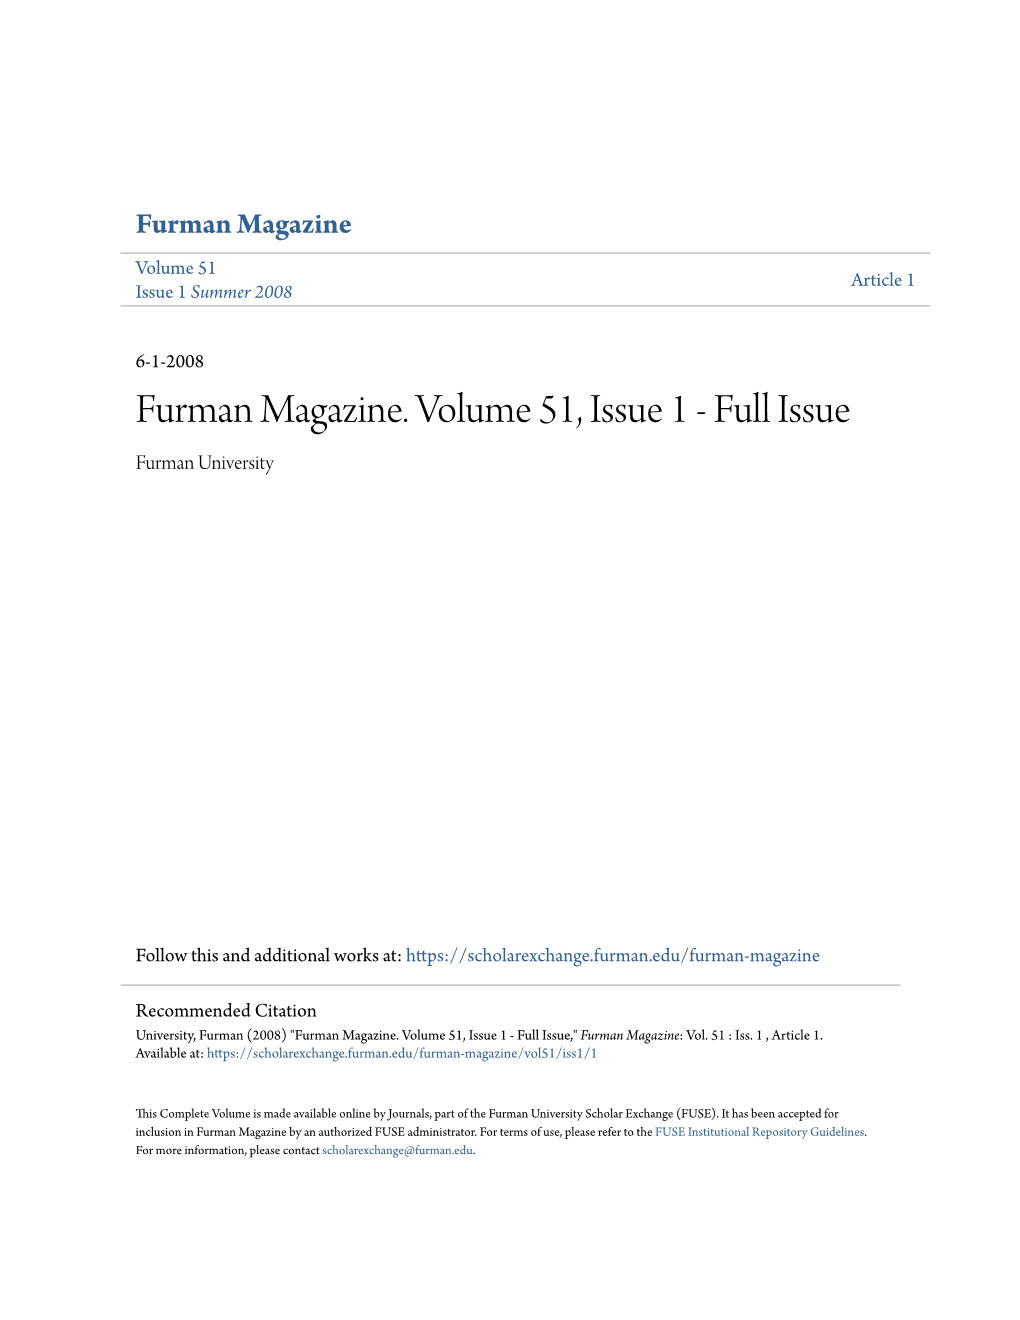 Furman Magazine. Volume 51, Issue 1 - Full Issue Furman University